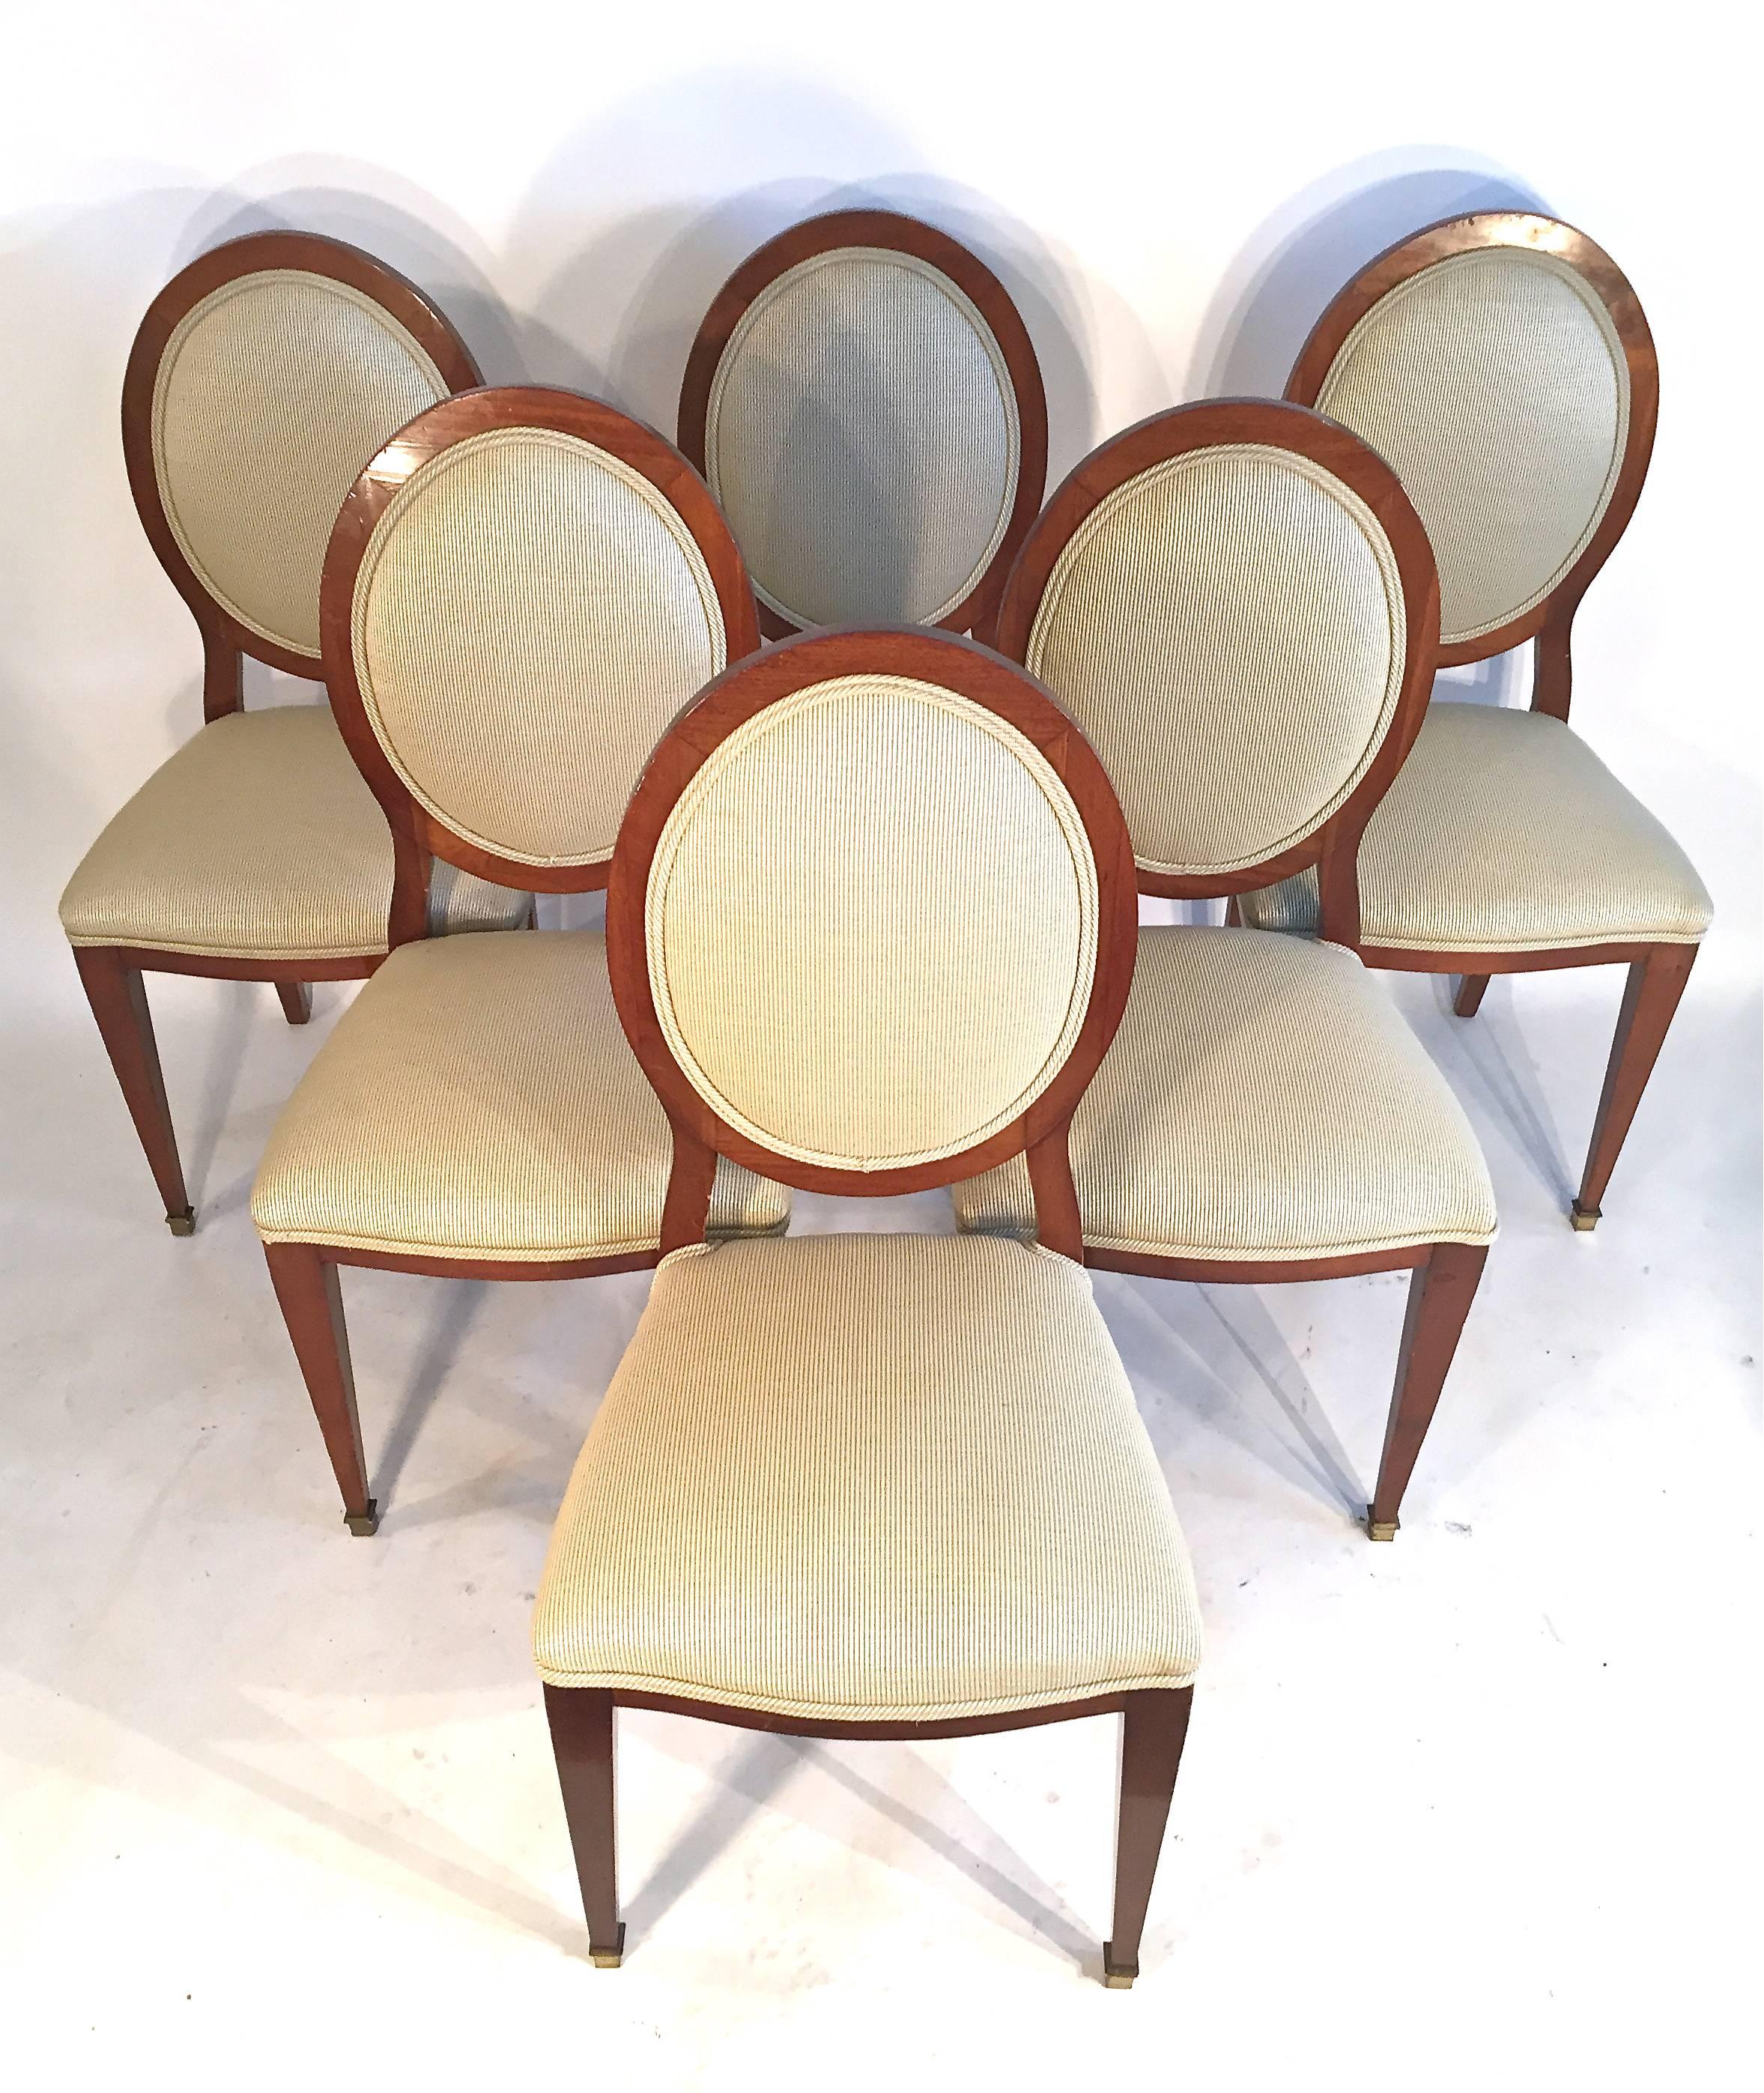 A set of six antique Biedermeier dining chairs.